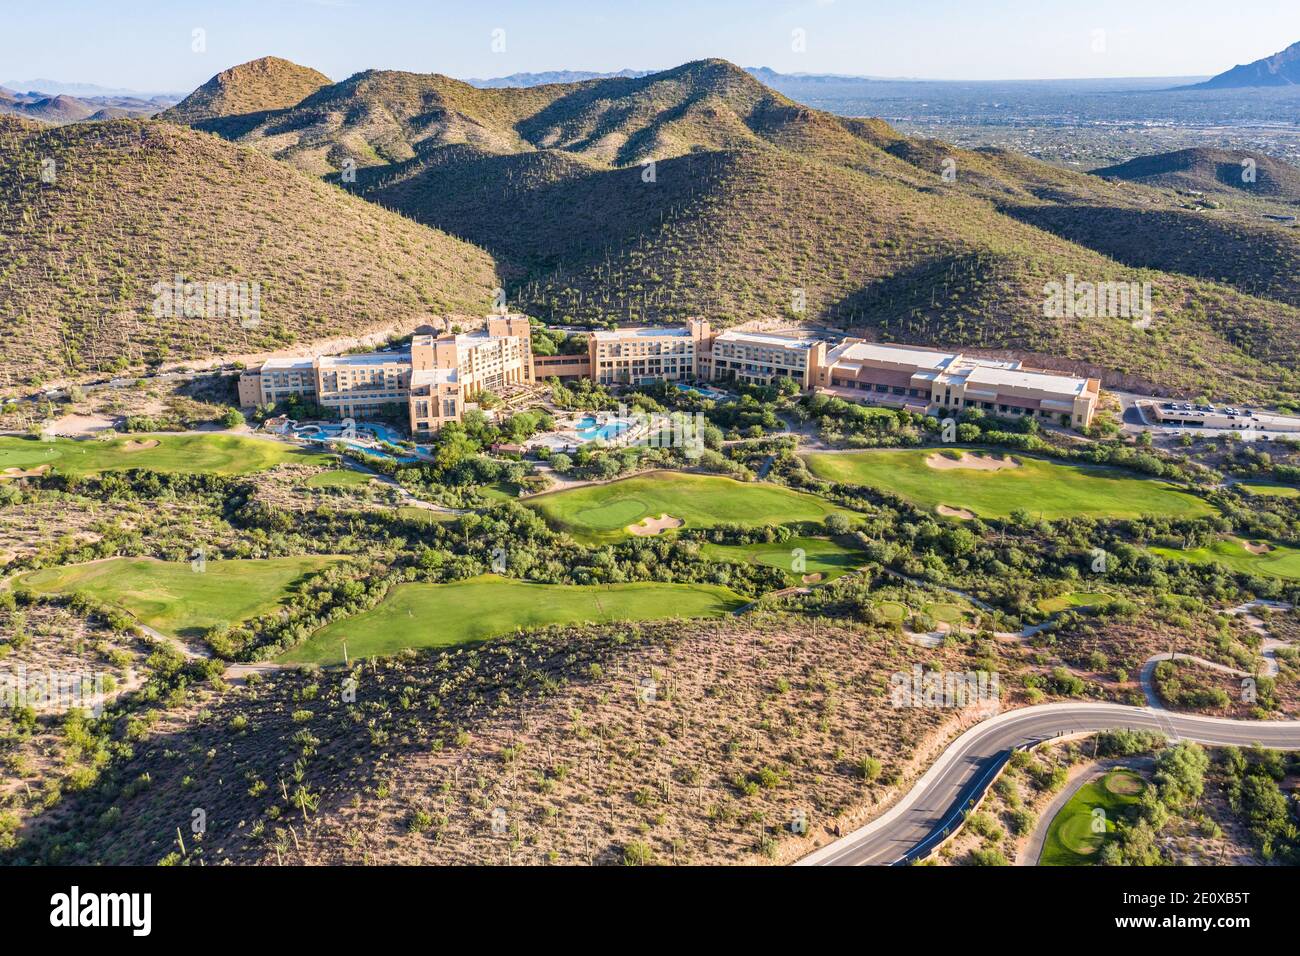 JW Marriott Starr Pass Resort Hotel, Tuscon, AZ, États-Unis Banque D'Images